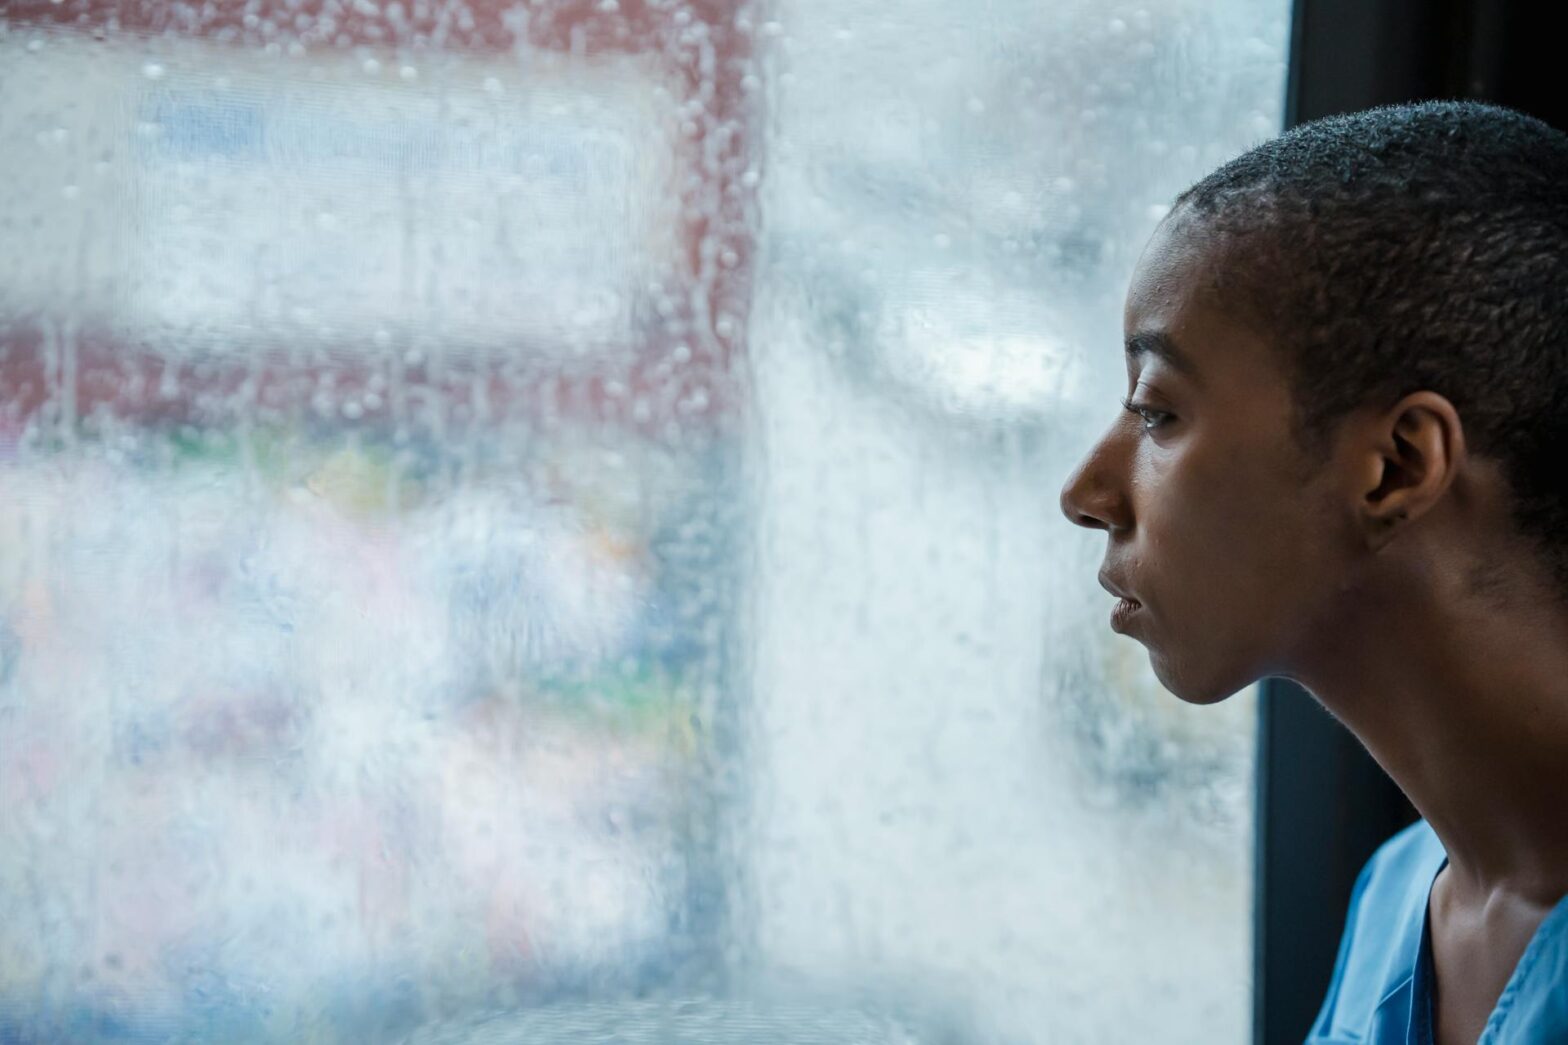 Melancholic Black woman sitting near window in rainy day